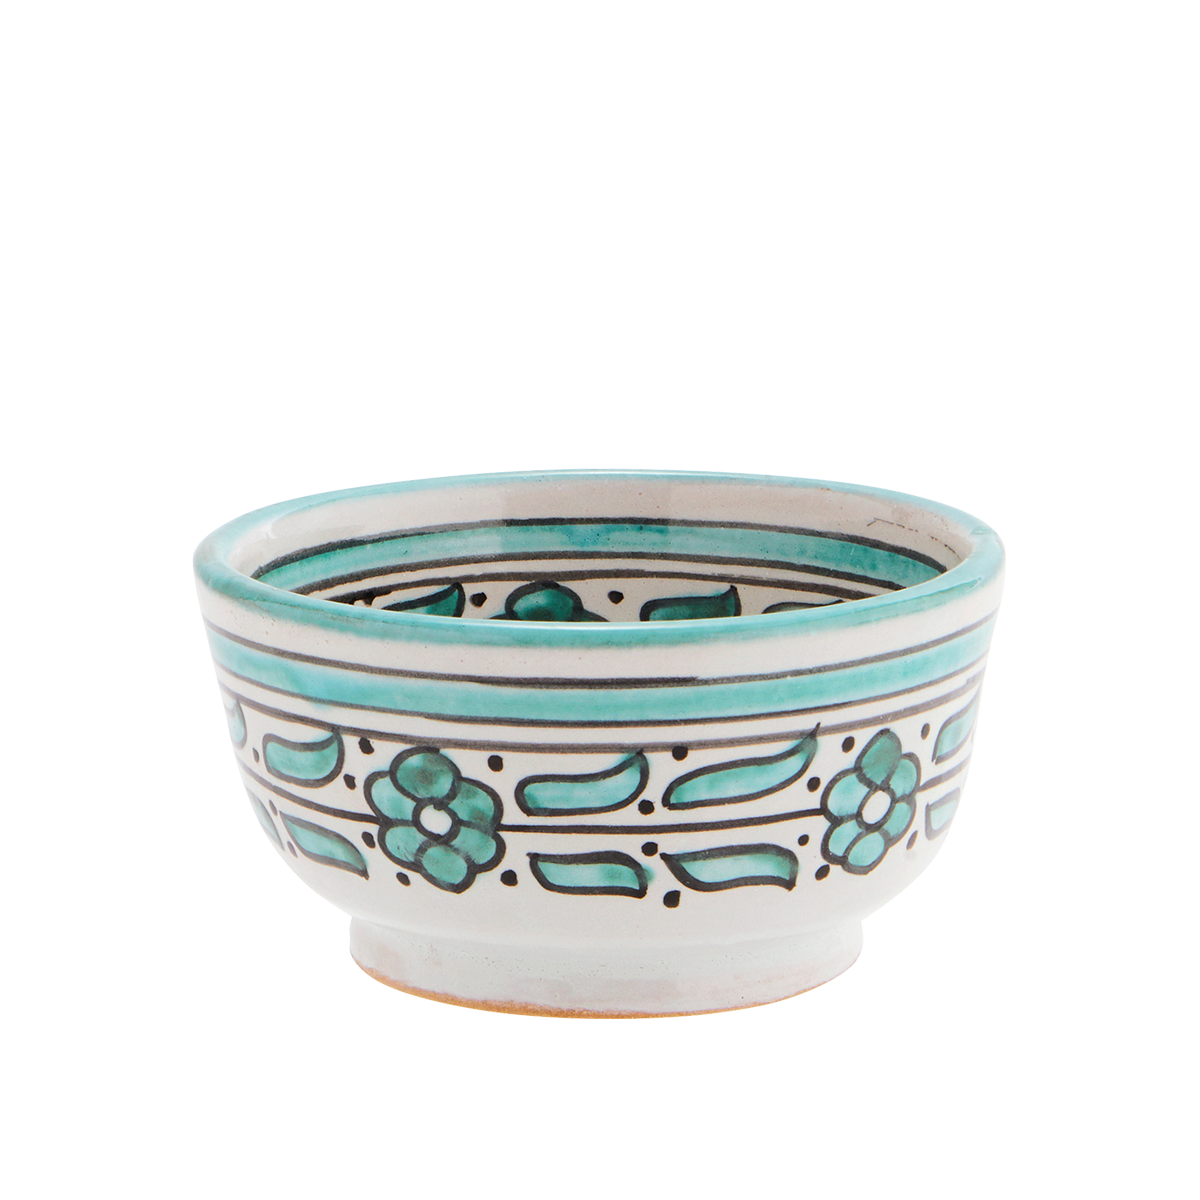 Hand painted stoneware bowl